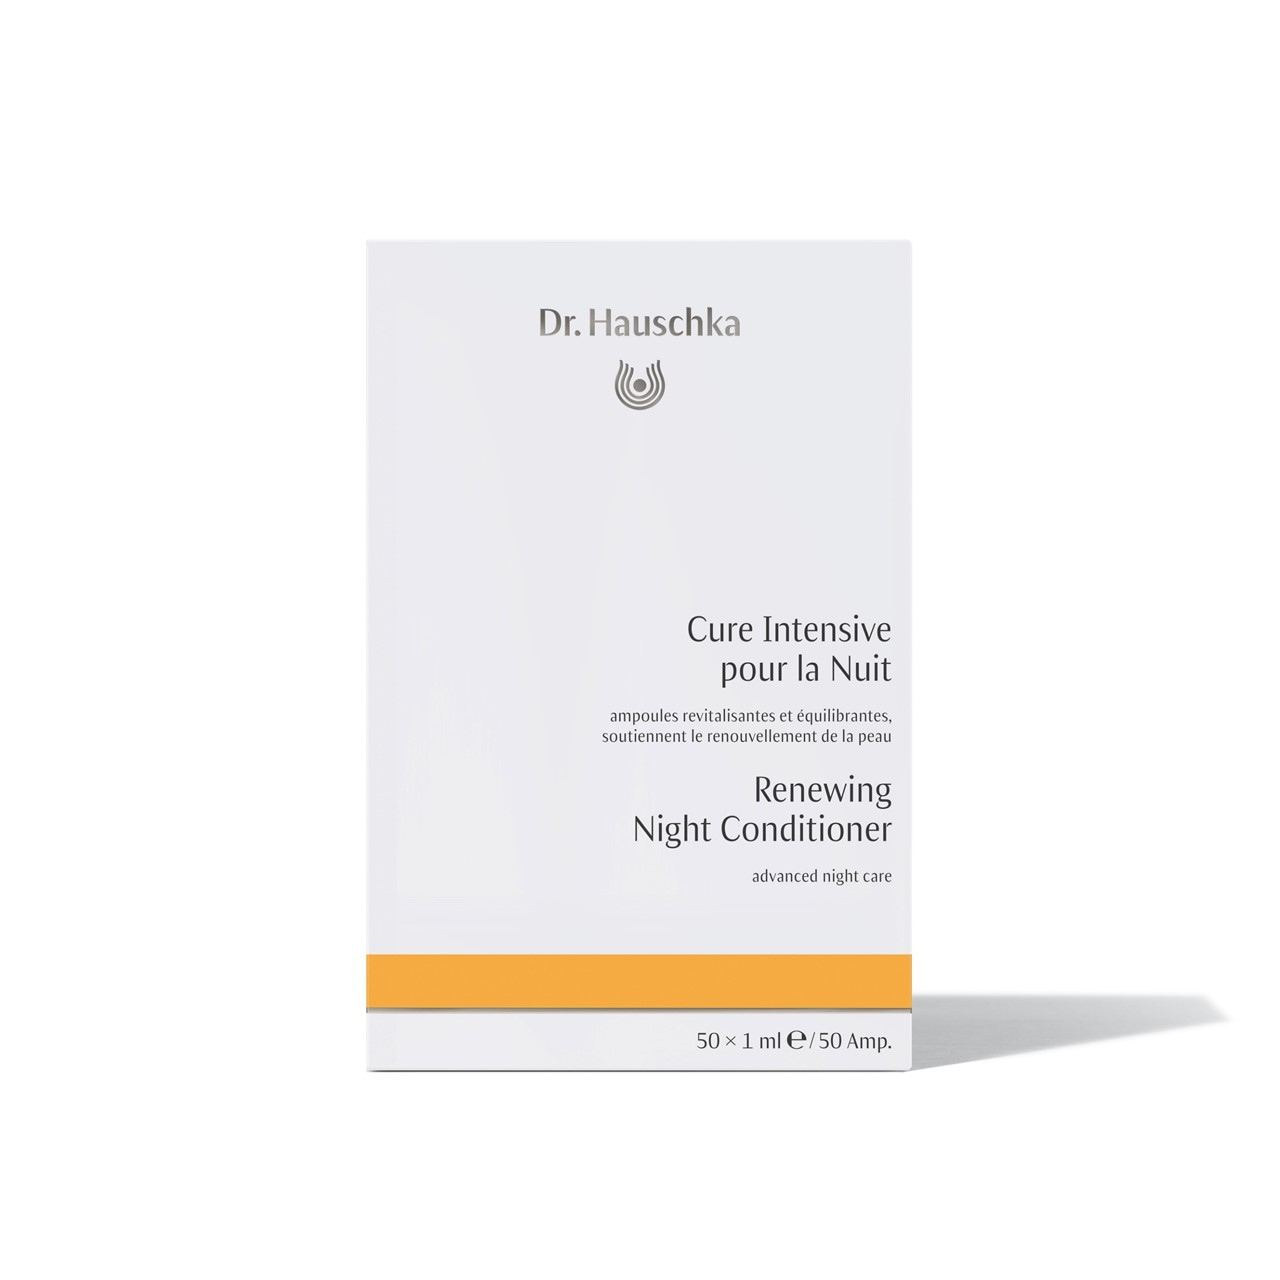 Dr. Hauschka Renewing Night Conditioner 50x1ml